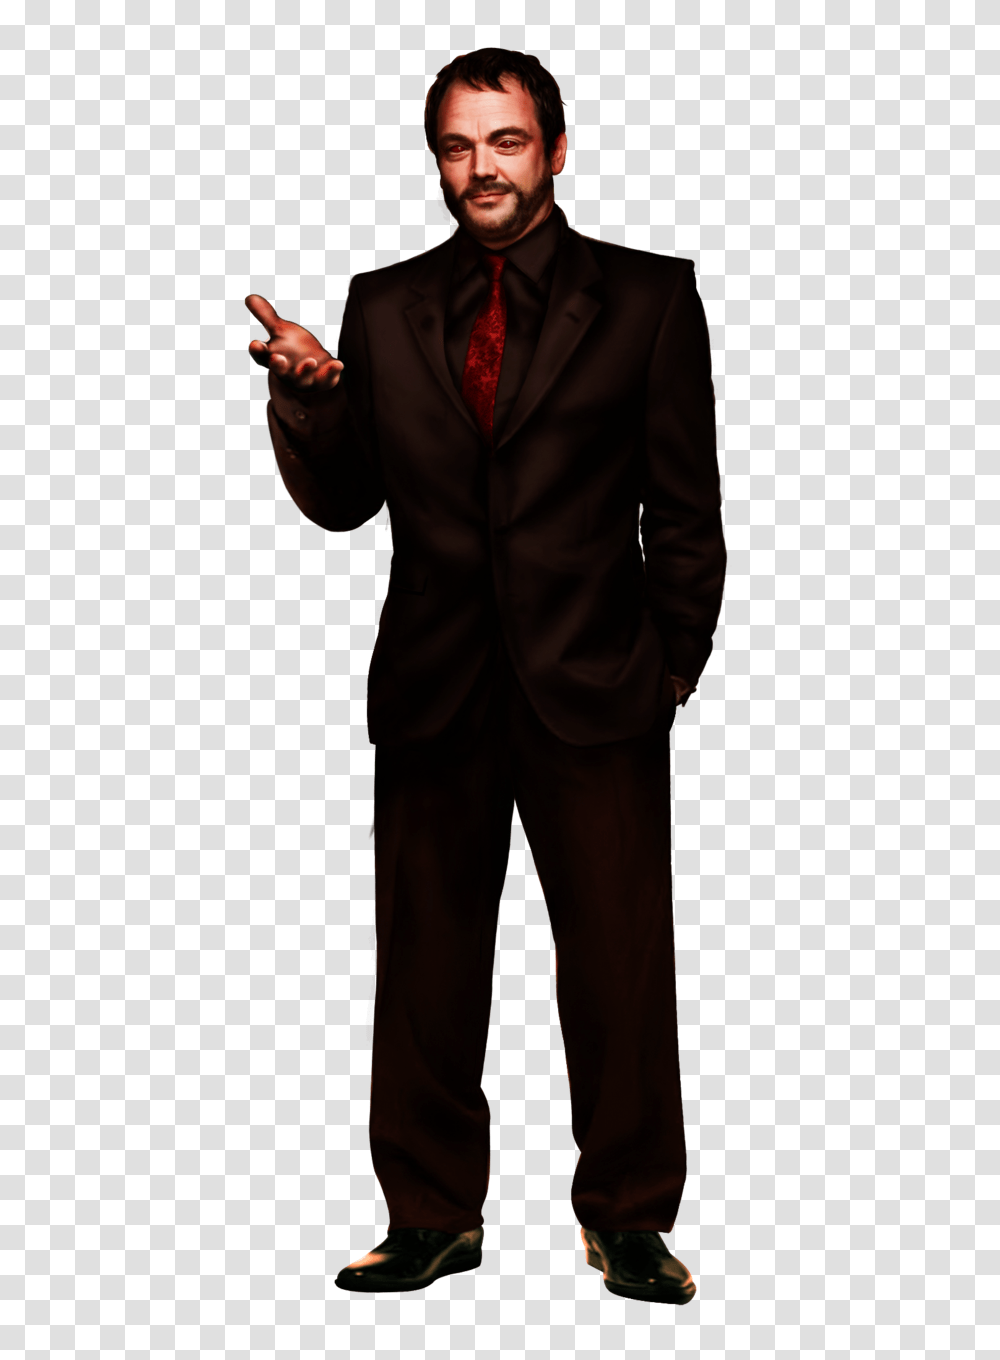 Crowley Full, Suit, Overcoat, Tie Transparent Png